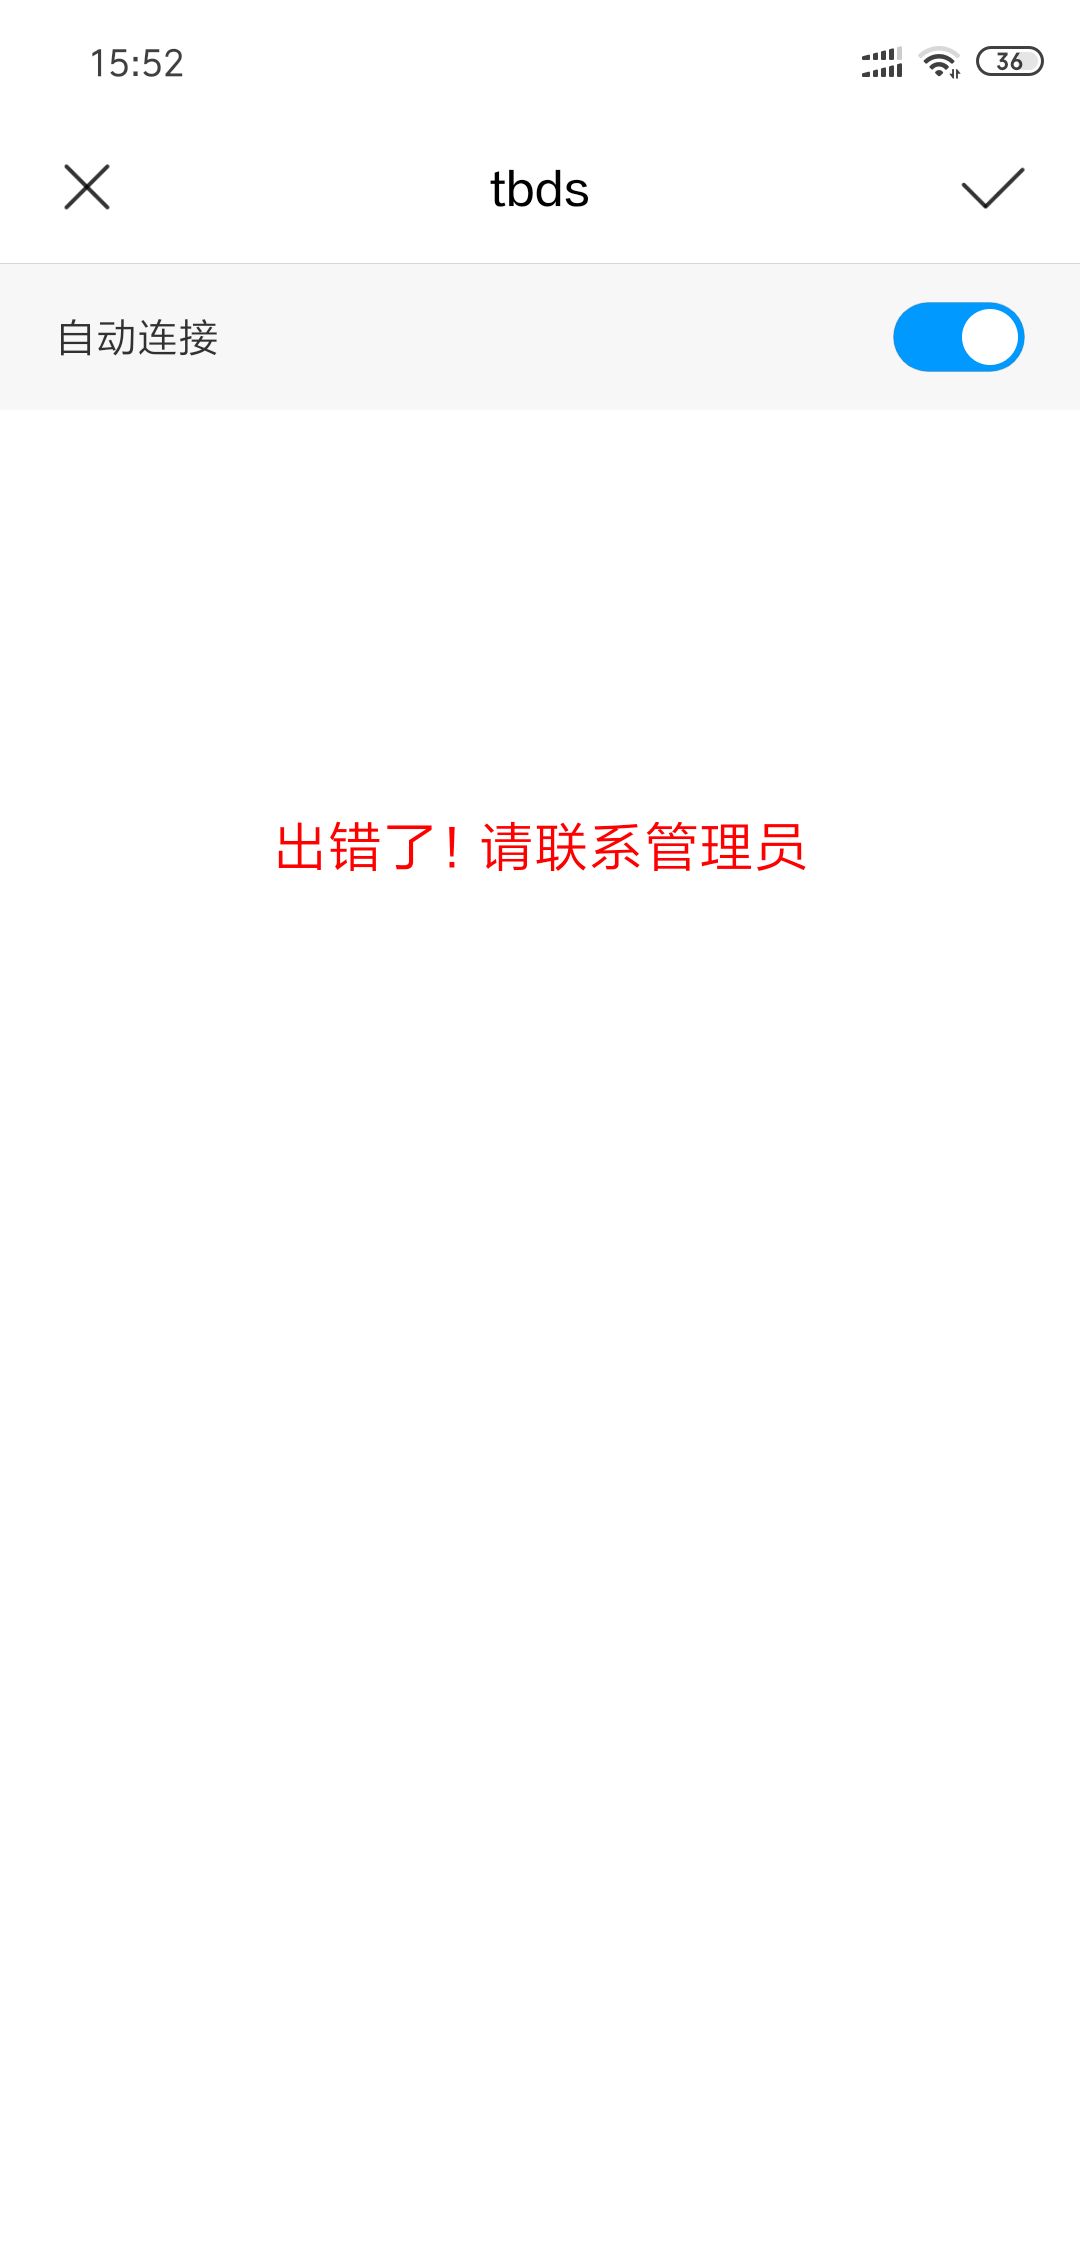 Screenshot_2019-04-12-15-52-16-705_com.android.htmlviewer.png